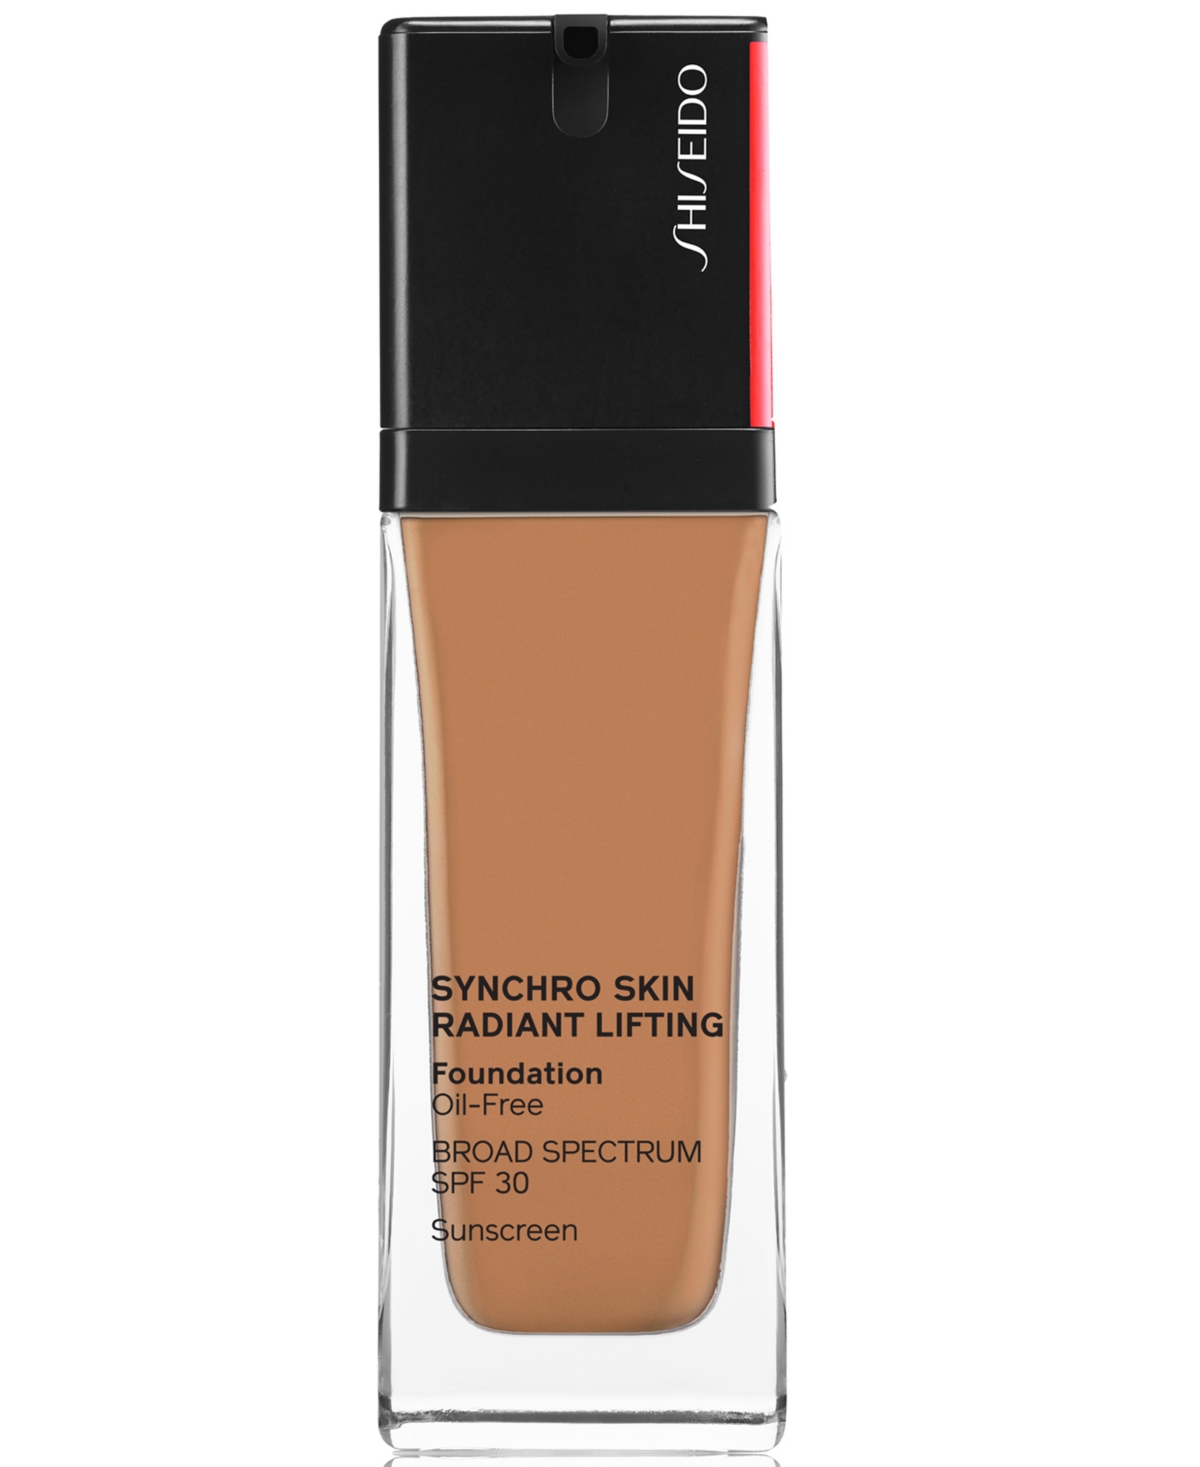 Shiseido Synchro Skin Radiant Lifting Foundation, 30 ml In Sunstone - Rose Tone For Tan Skin,rose